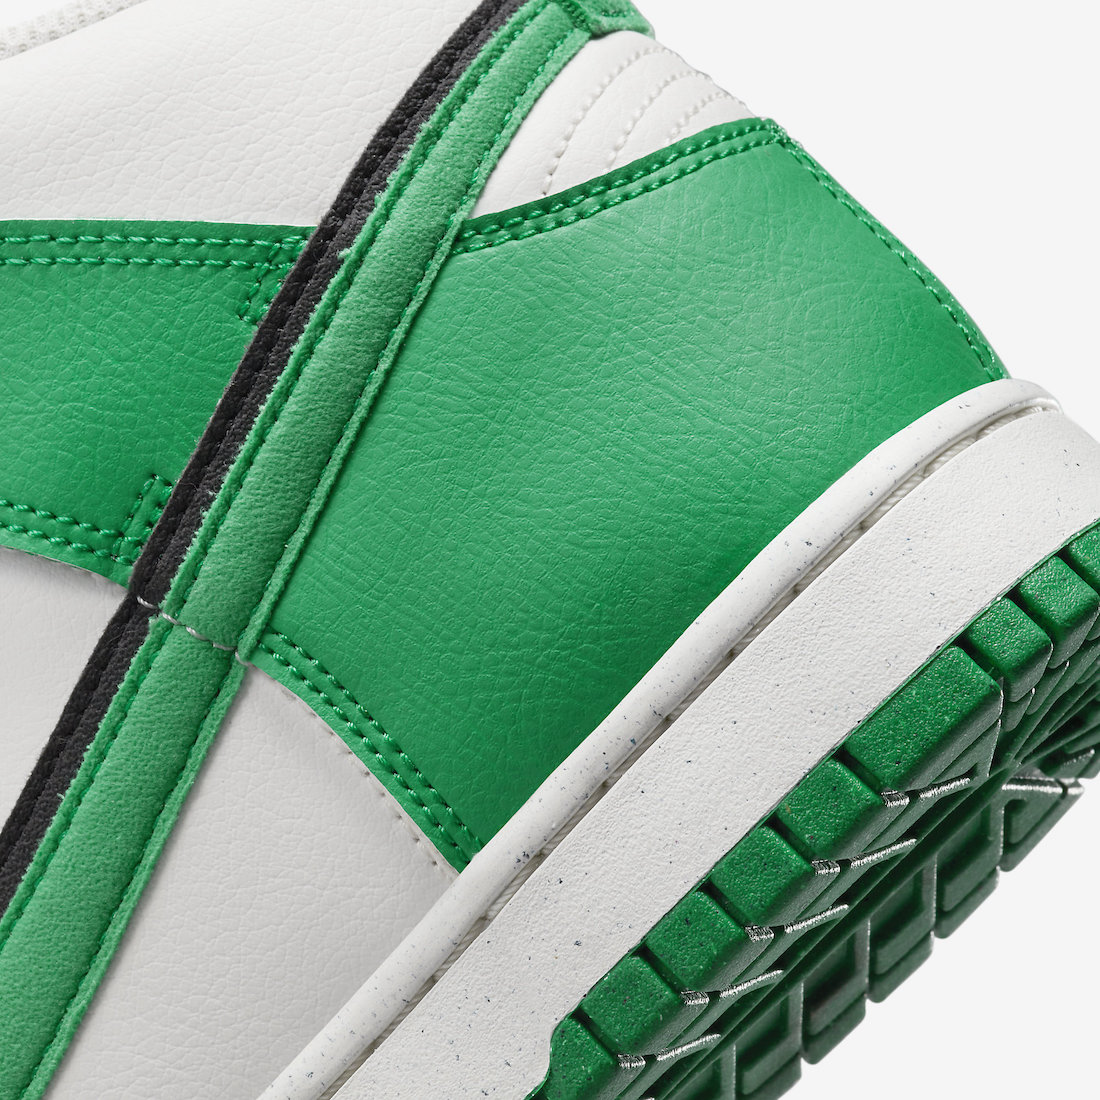 Nike Dunk High Retro SE Stadium Green DO9775-001 Release Date